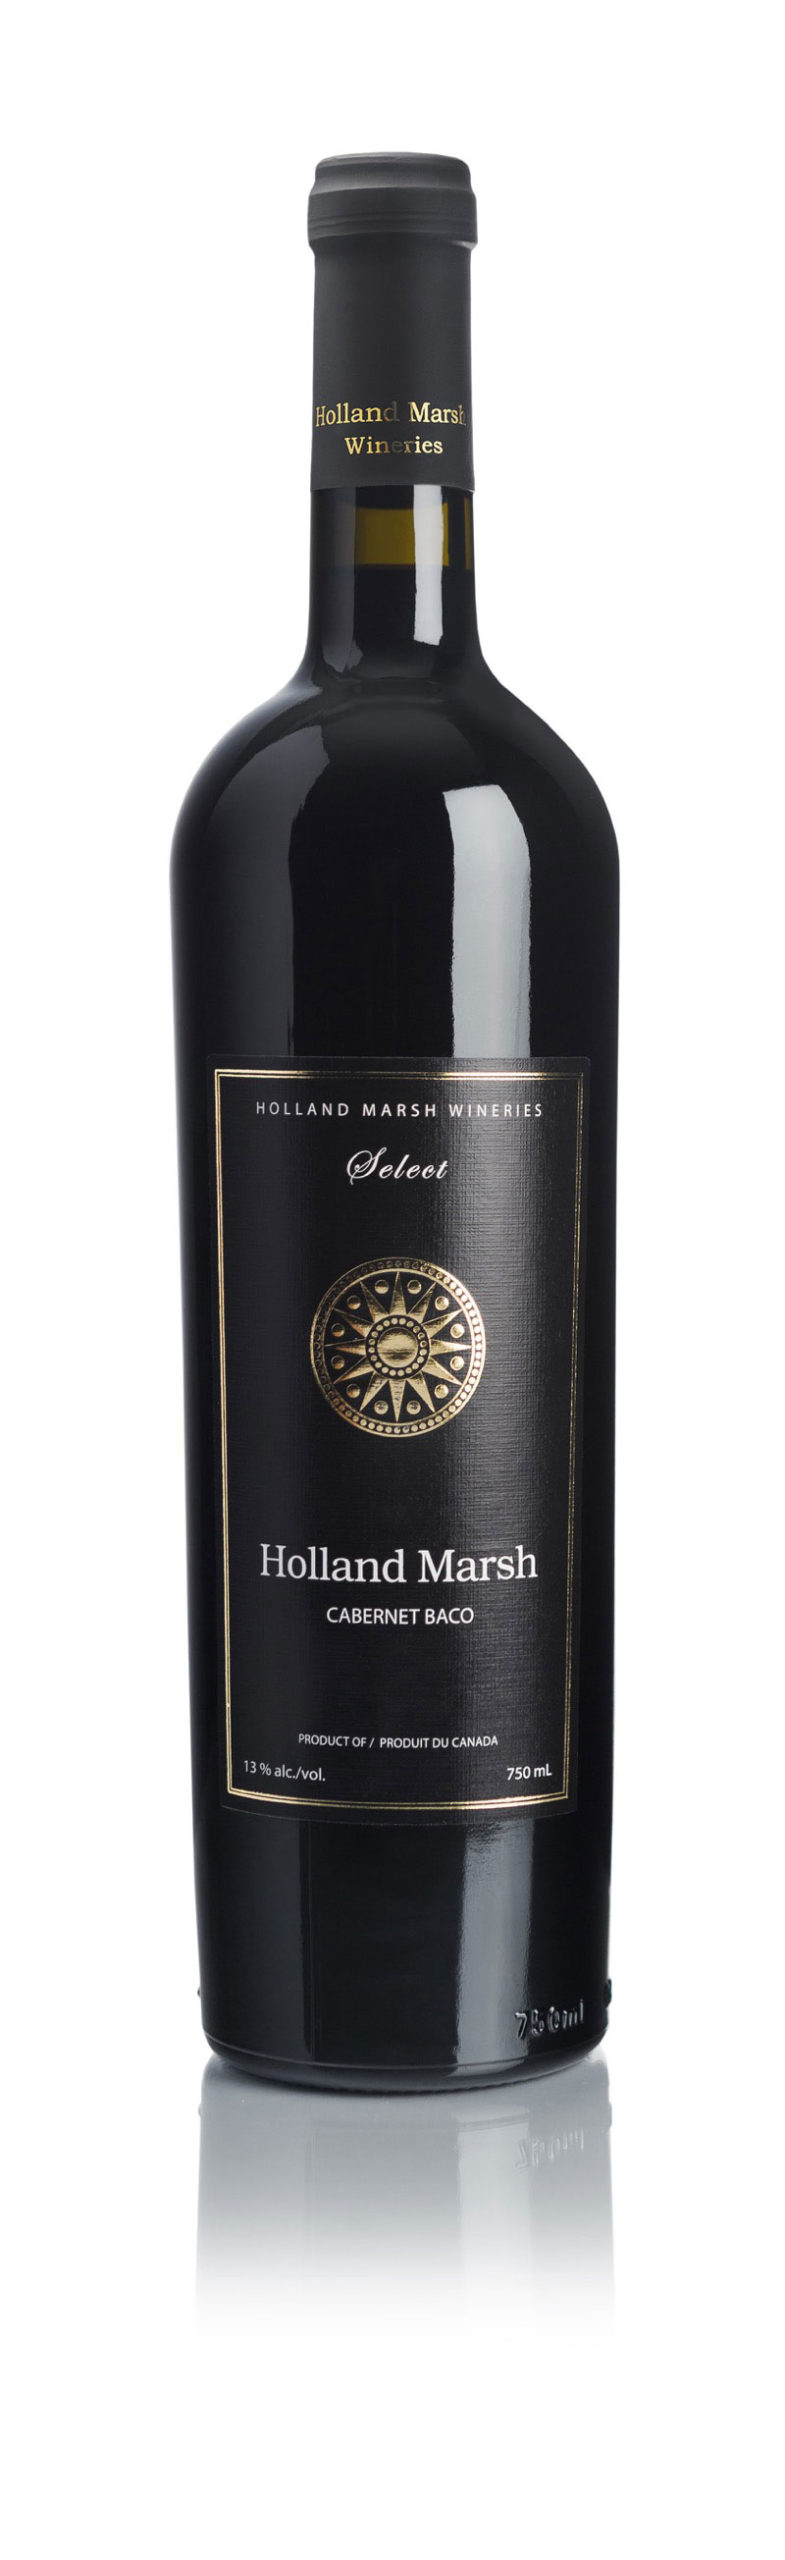 Holland Marsh Winery - 2013 Select Cabernet Baco